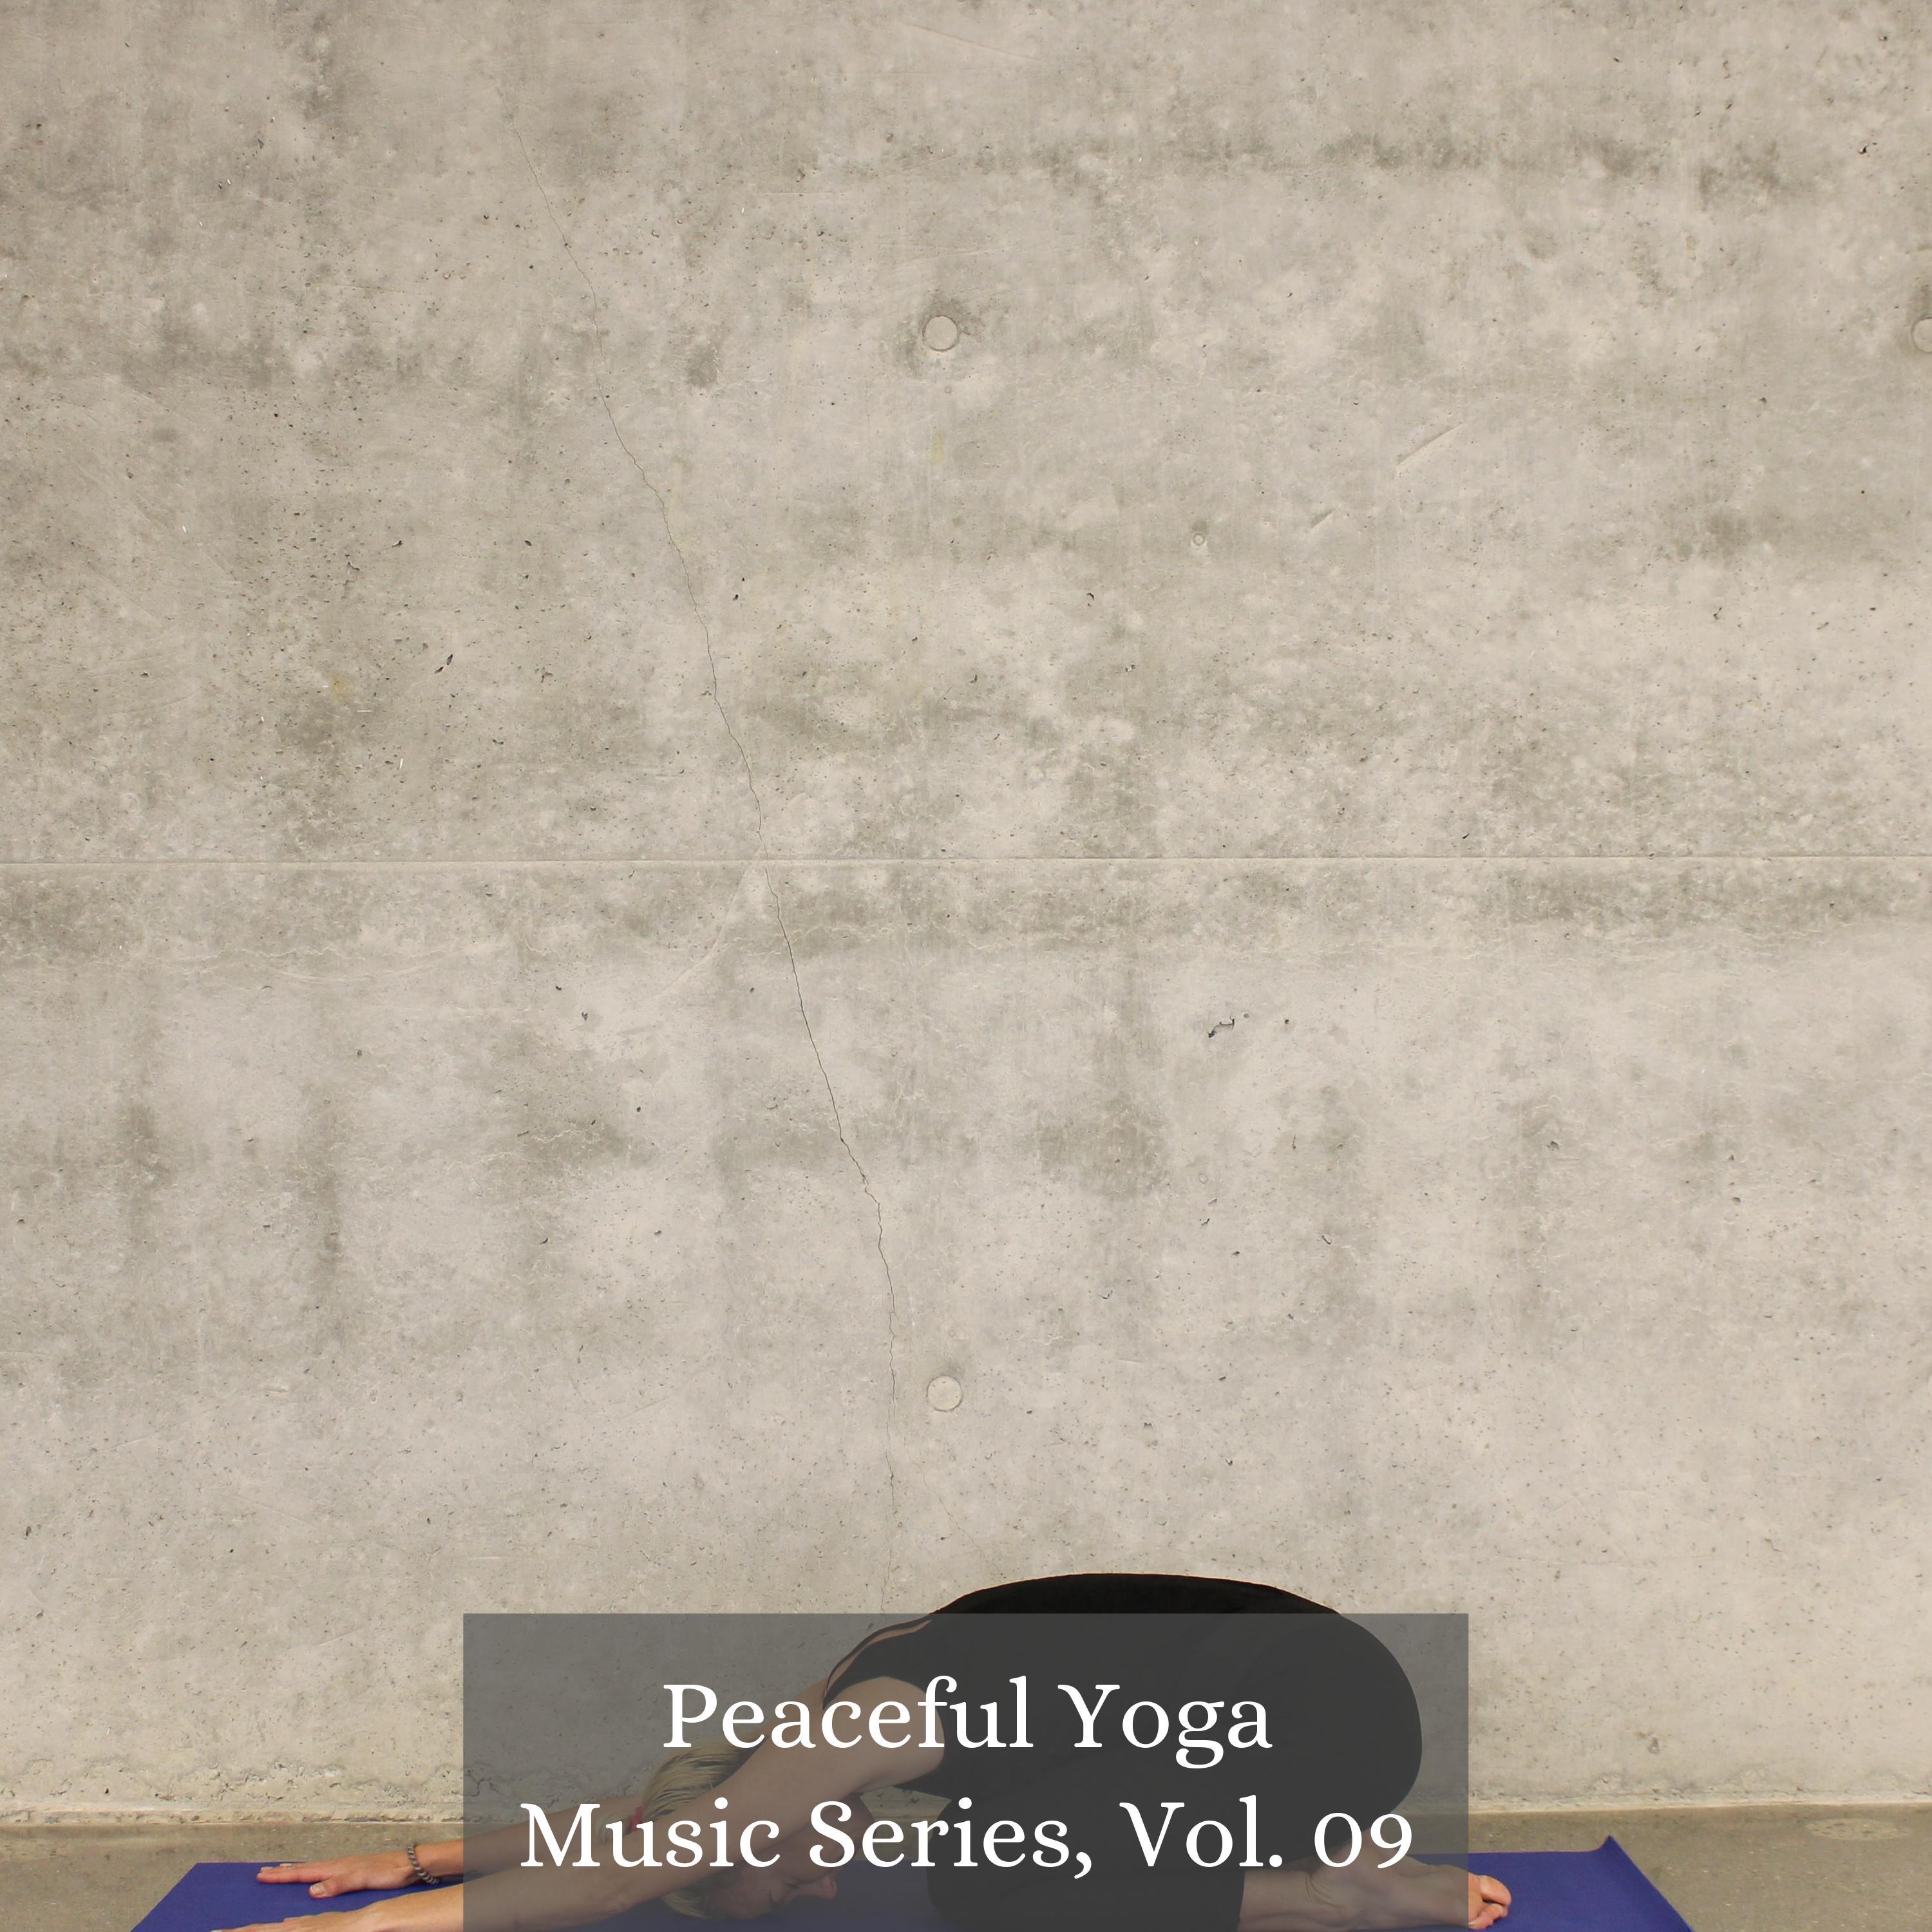 Yogee Sutra - Lovely Spiritual Healing Sound